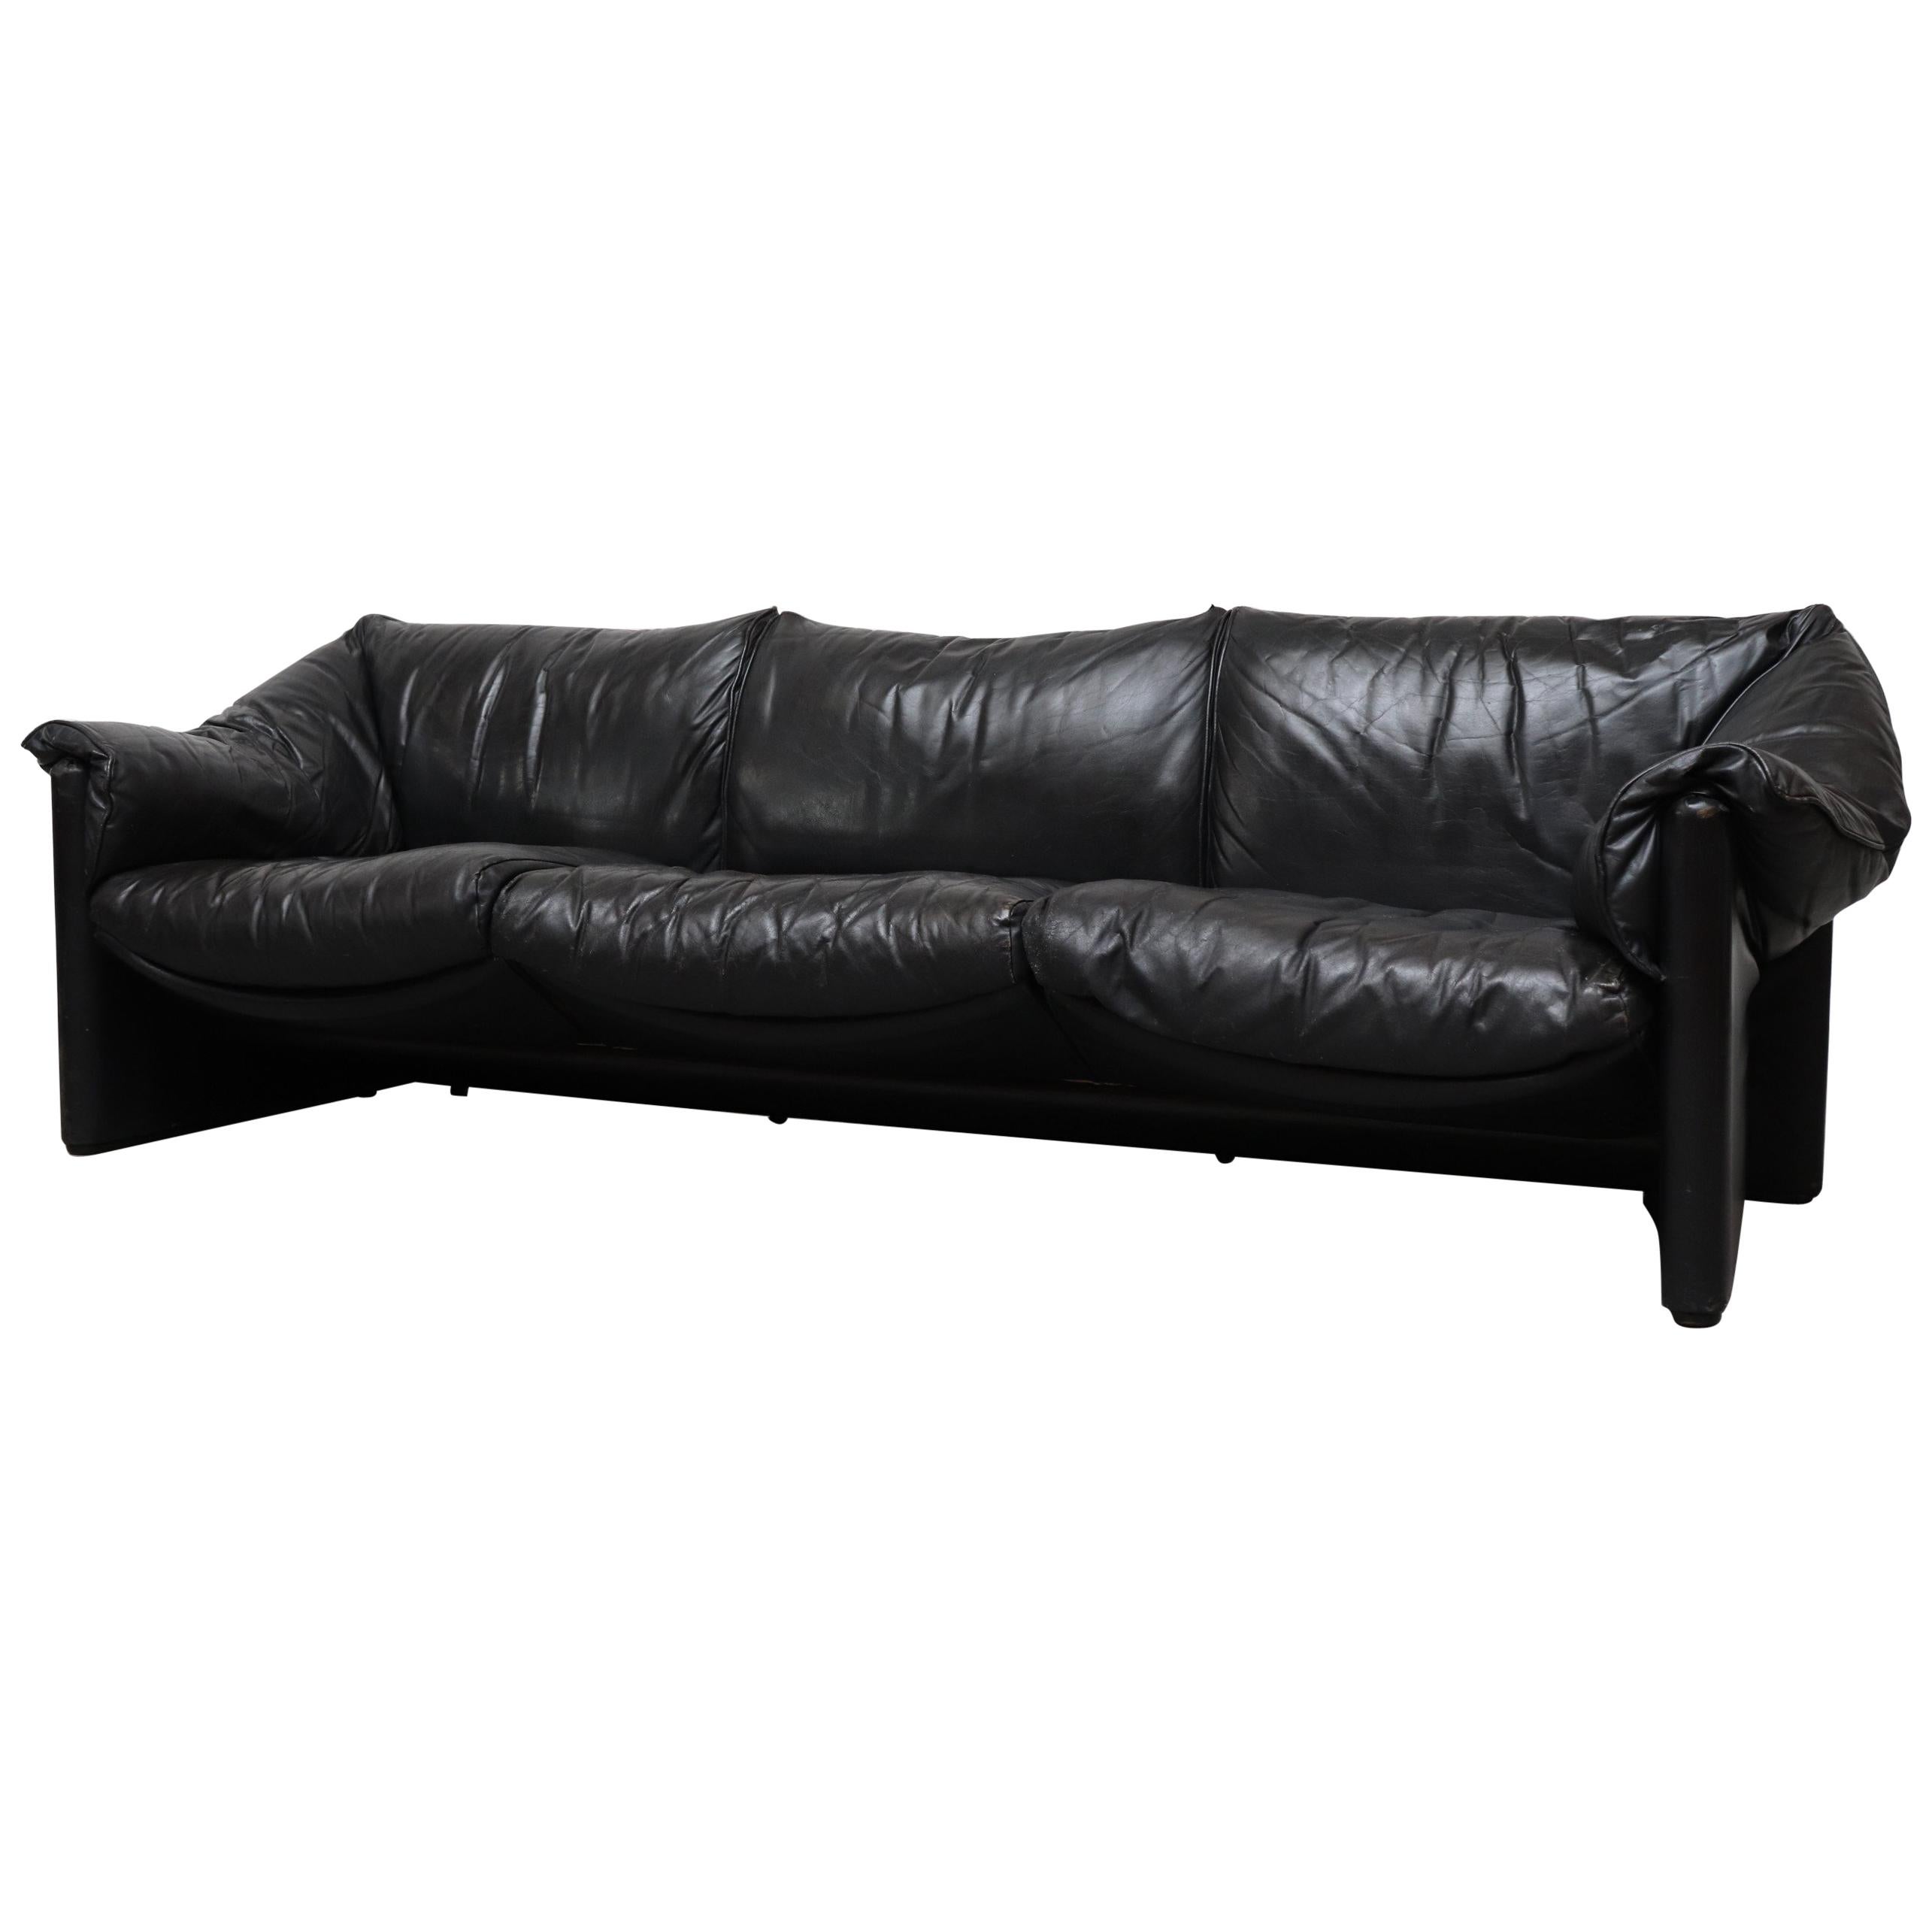 Mario Bellini for Cassina Handsome Black Leather 3-Seat Sofa